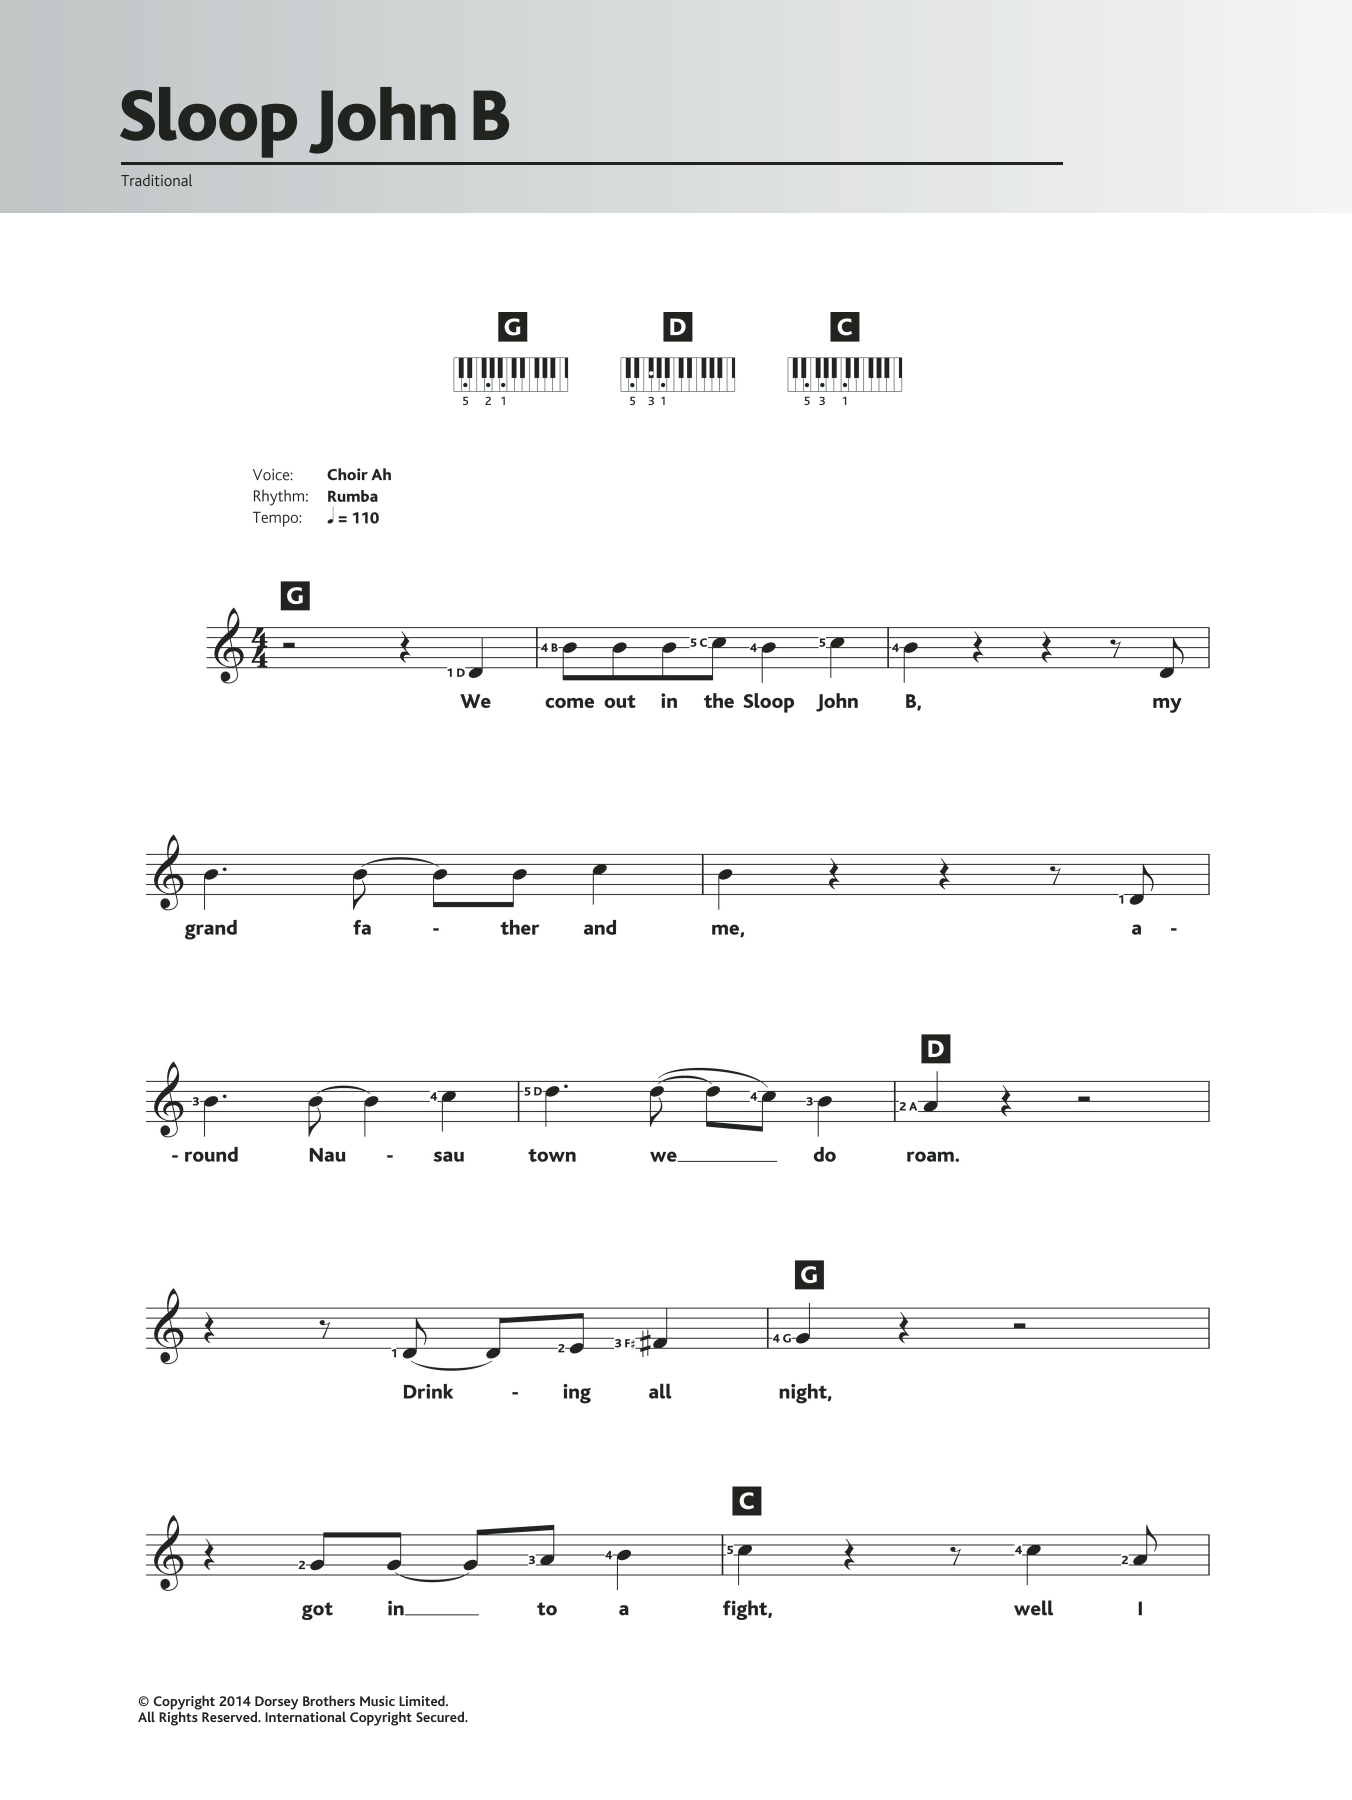 Traditional Sloop John B. Sheet Music Notes & Chords for Ukulele with strumming patterns - Download or Print PDF